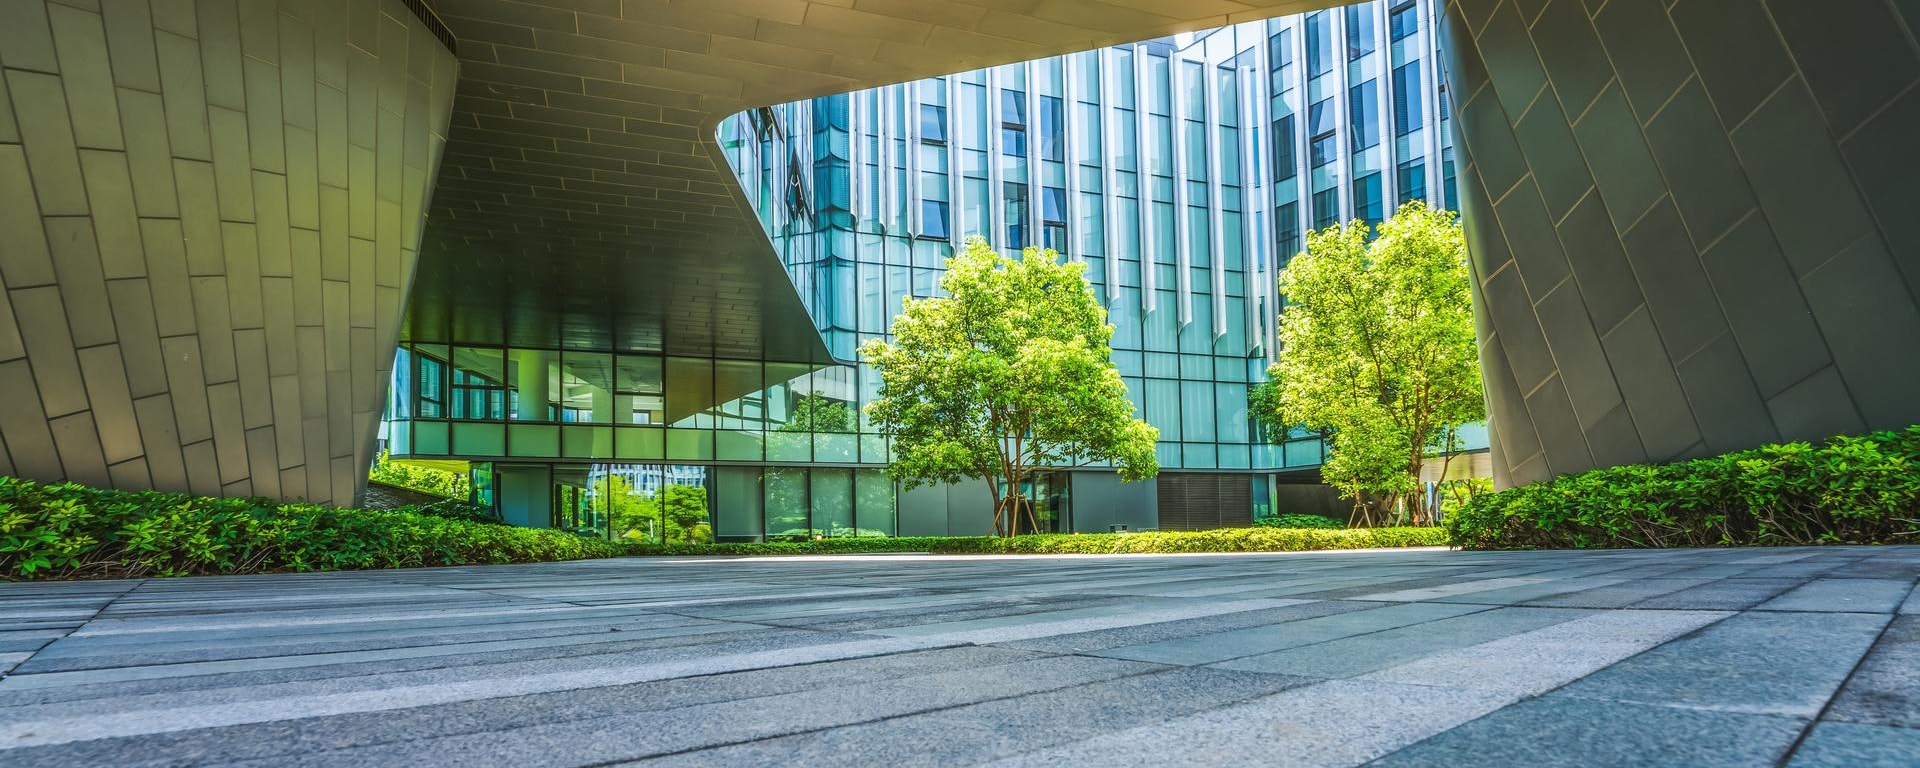 Vontobel's Asset Management - Building with a green inner courtyard